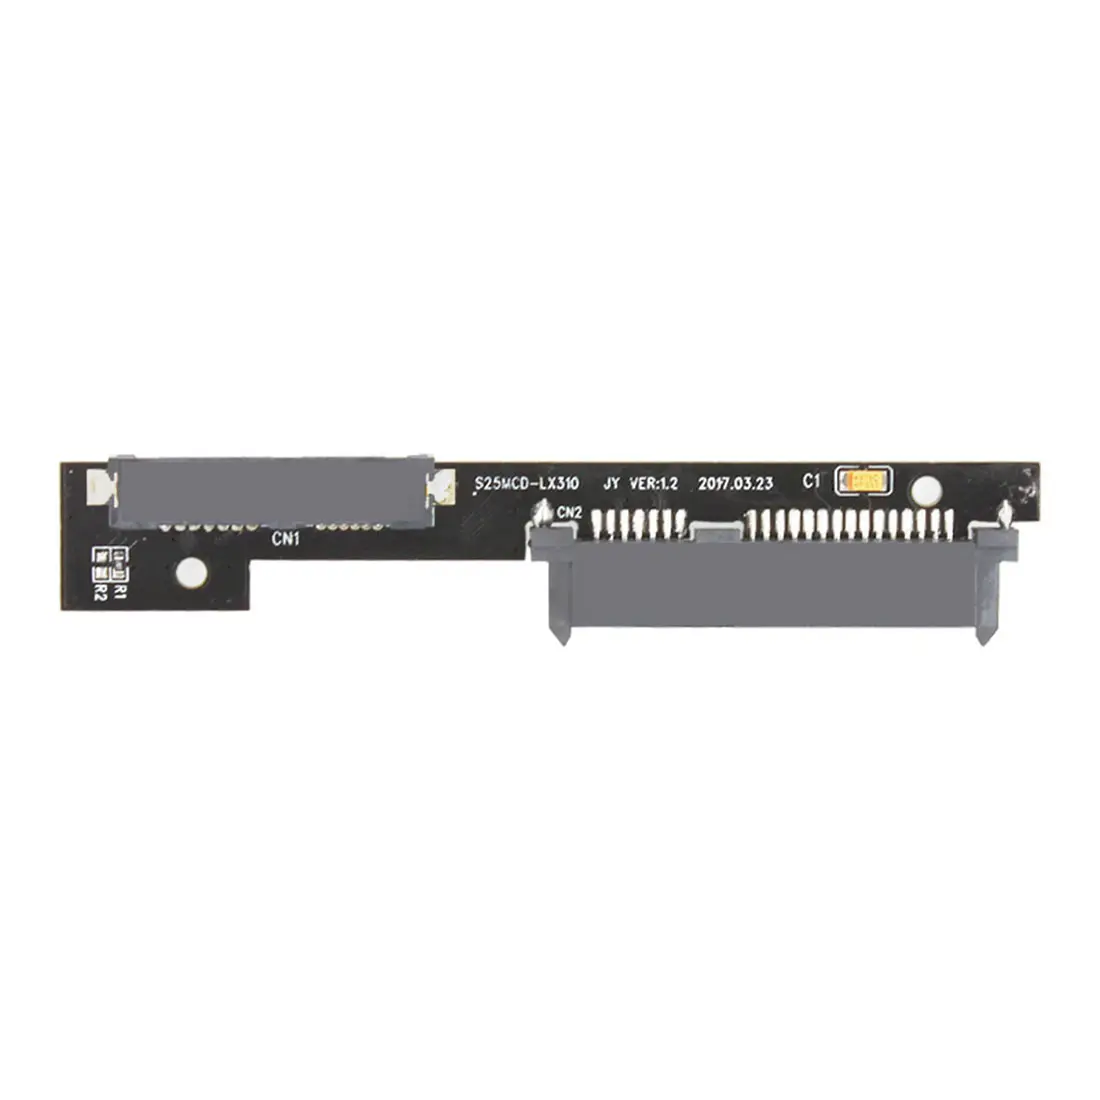 Micro SATA 7+6 Male to SATA 7+15 Female Adapter ATA Converter for Lenovo 310 312 320 330 IdeaPad 510 5000 Circuit Board